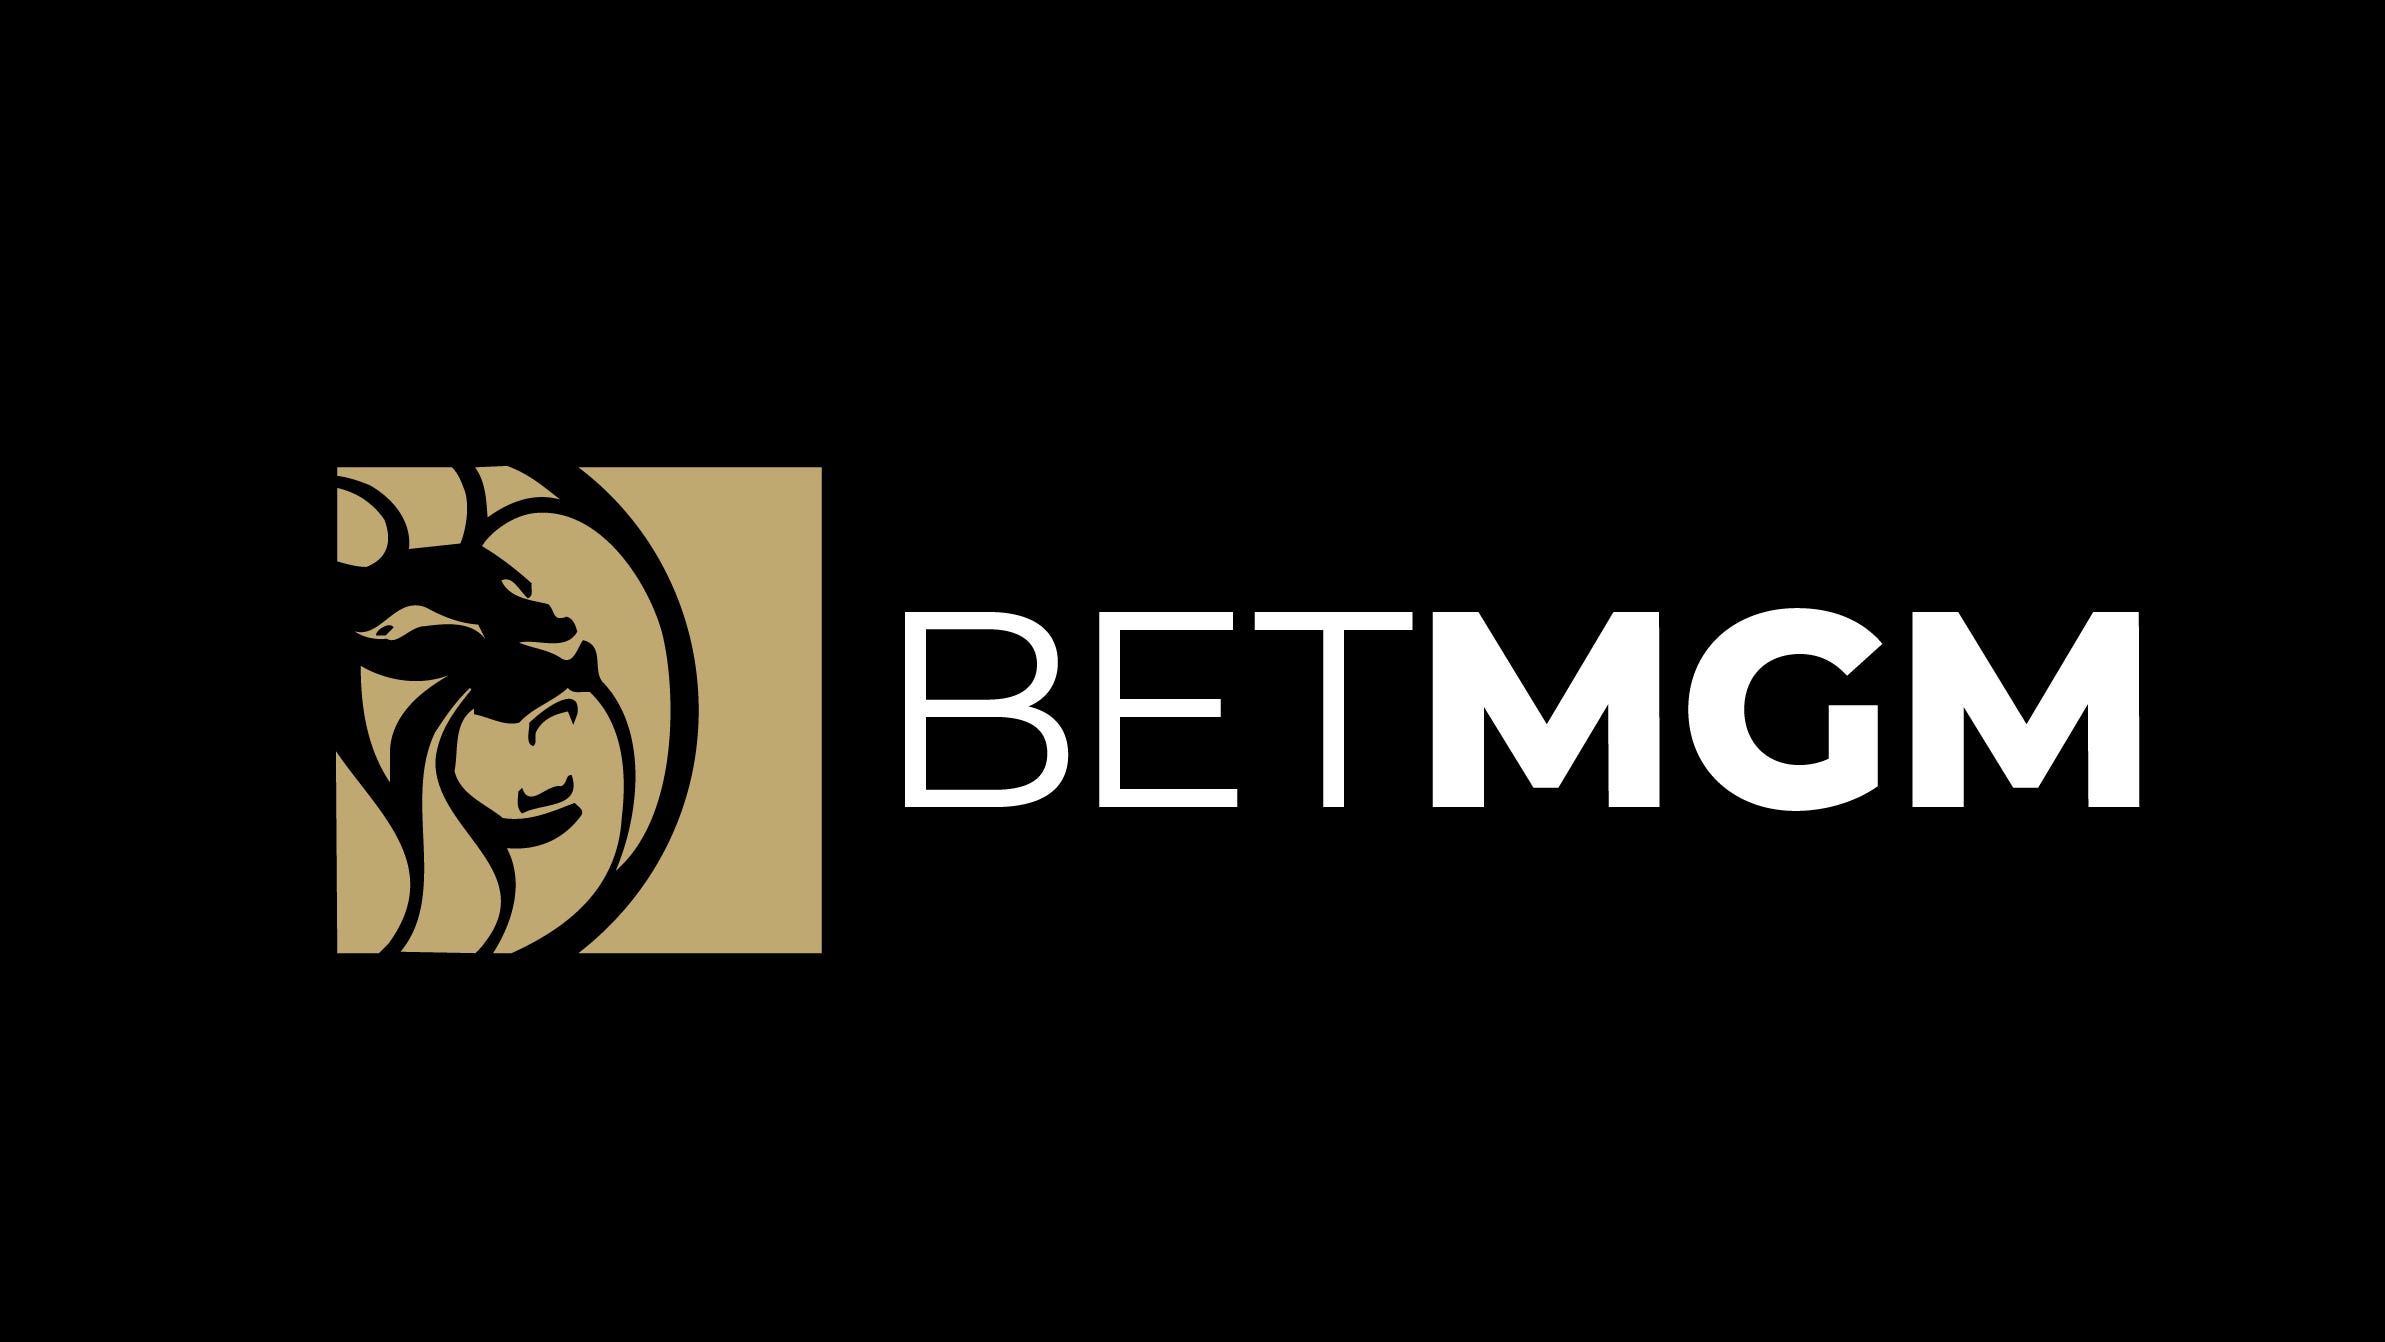 BetMGM named official gaming partner of Detroit Tigers